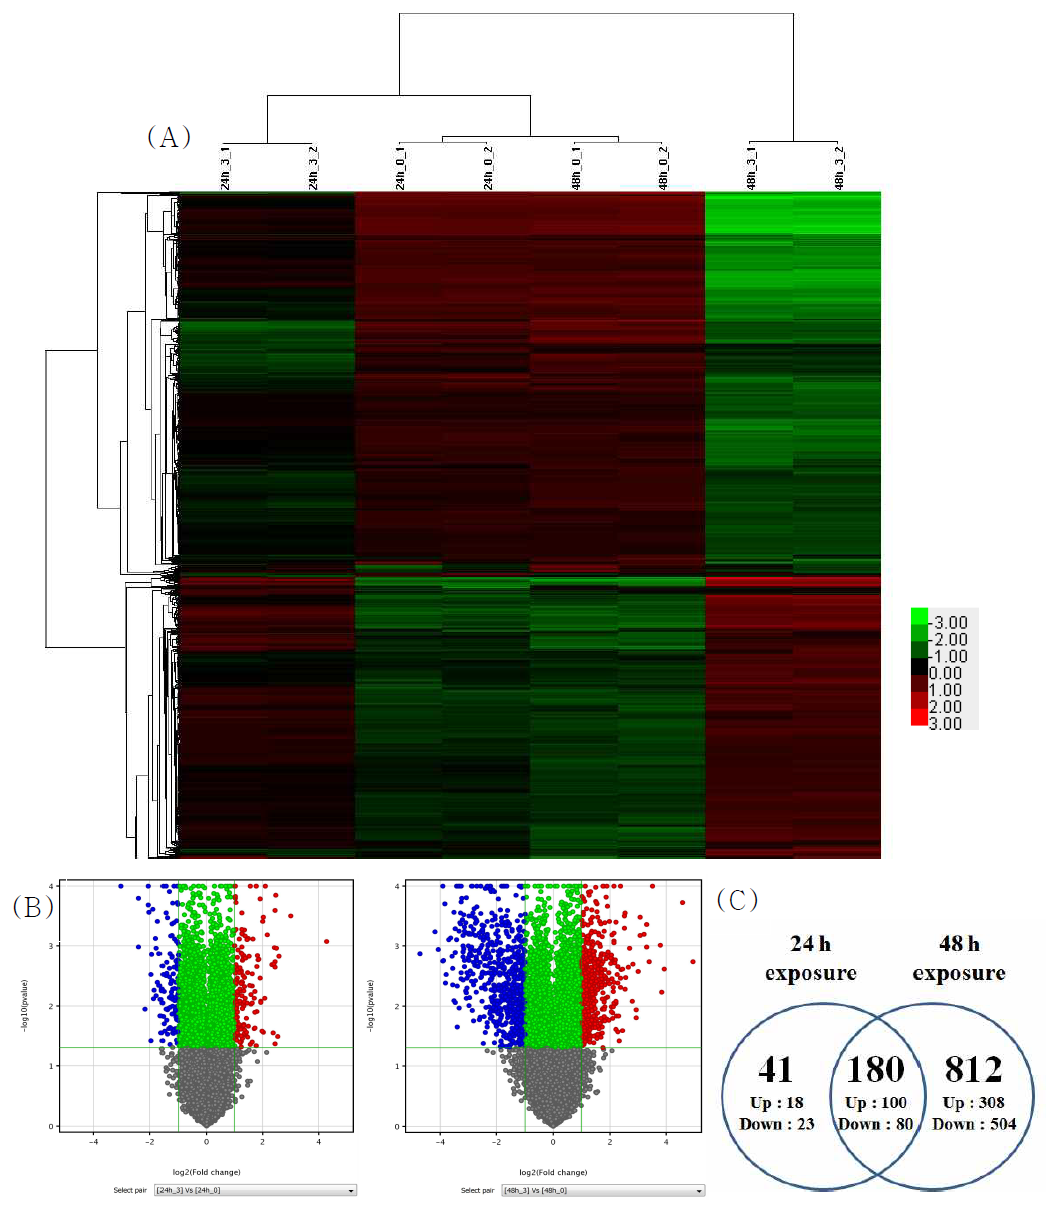 PHMG-P 처리에 의한 mRNA 발현 변화 (A) Hierarchical clustering (B) Volcano plot (C) miRNA 발현 개수에 대한 벤다이어그램